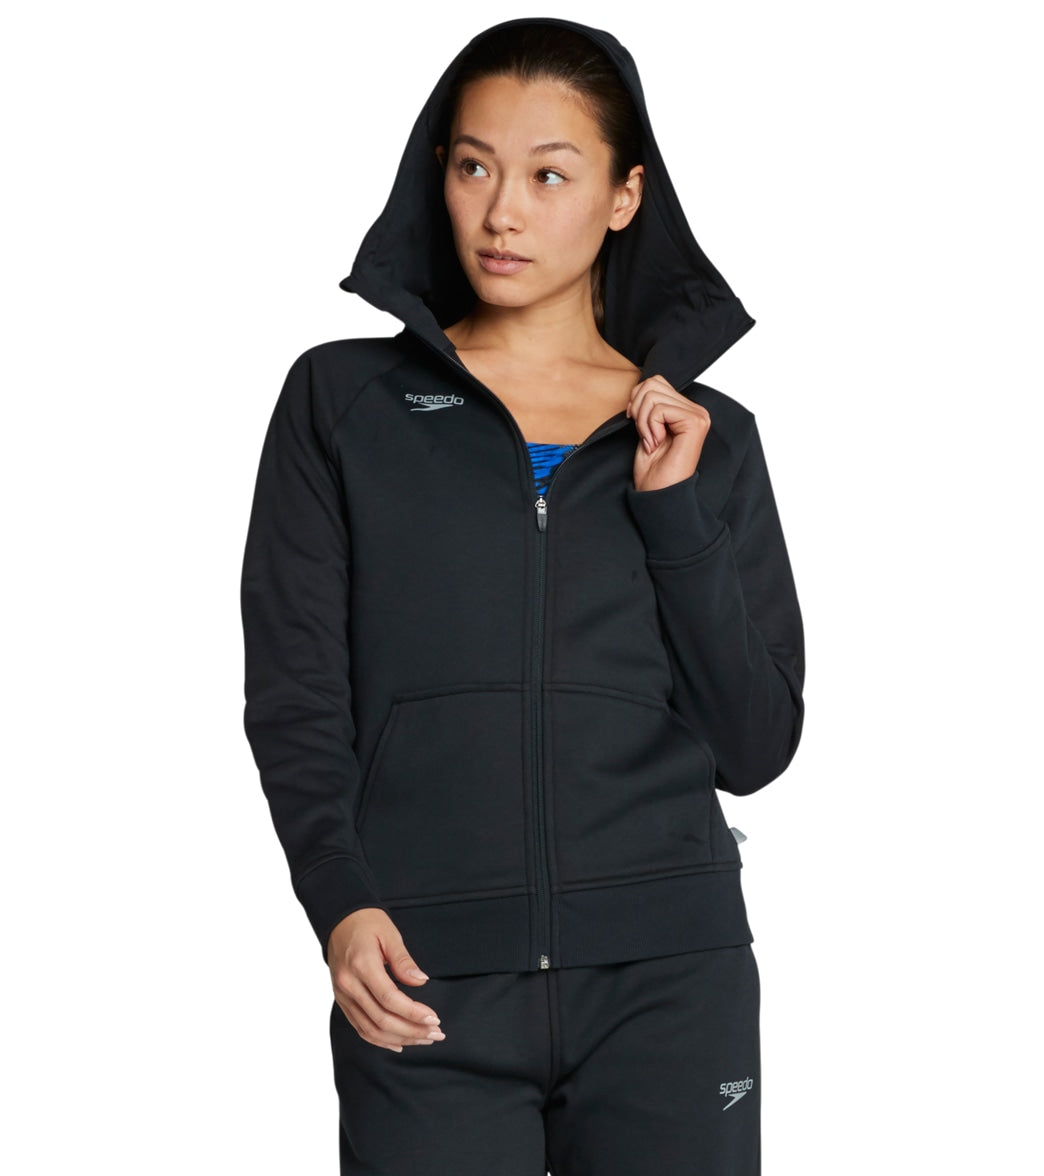 Speedo Women's Team Jacket - Black Medium Size Medium Cotton/Polyester - Swimoutlet.com